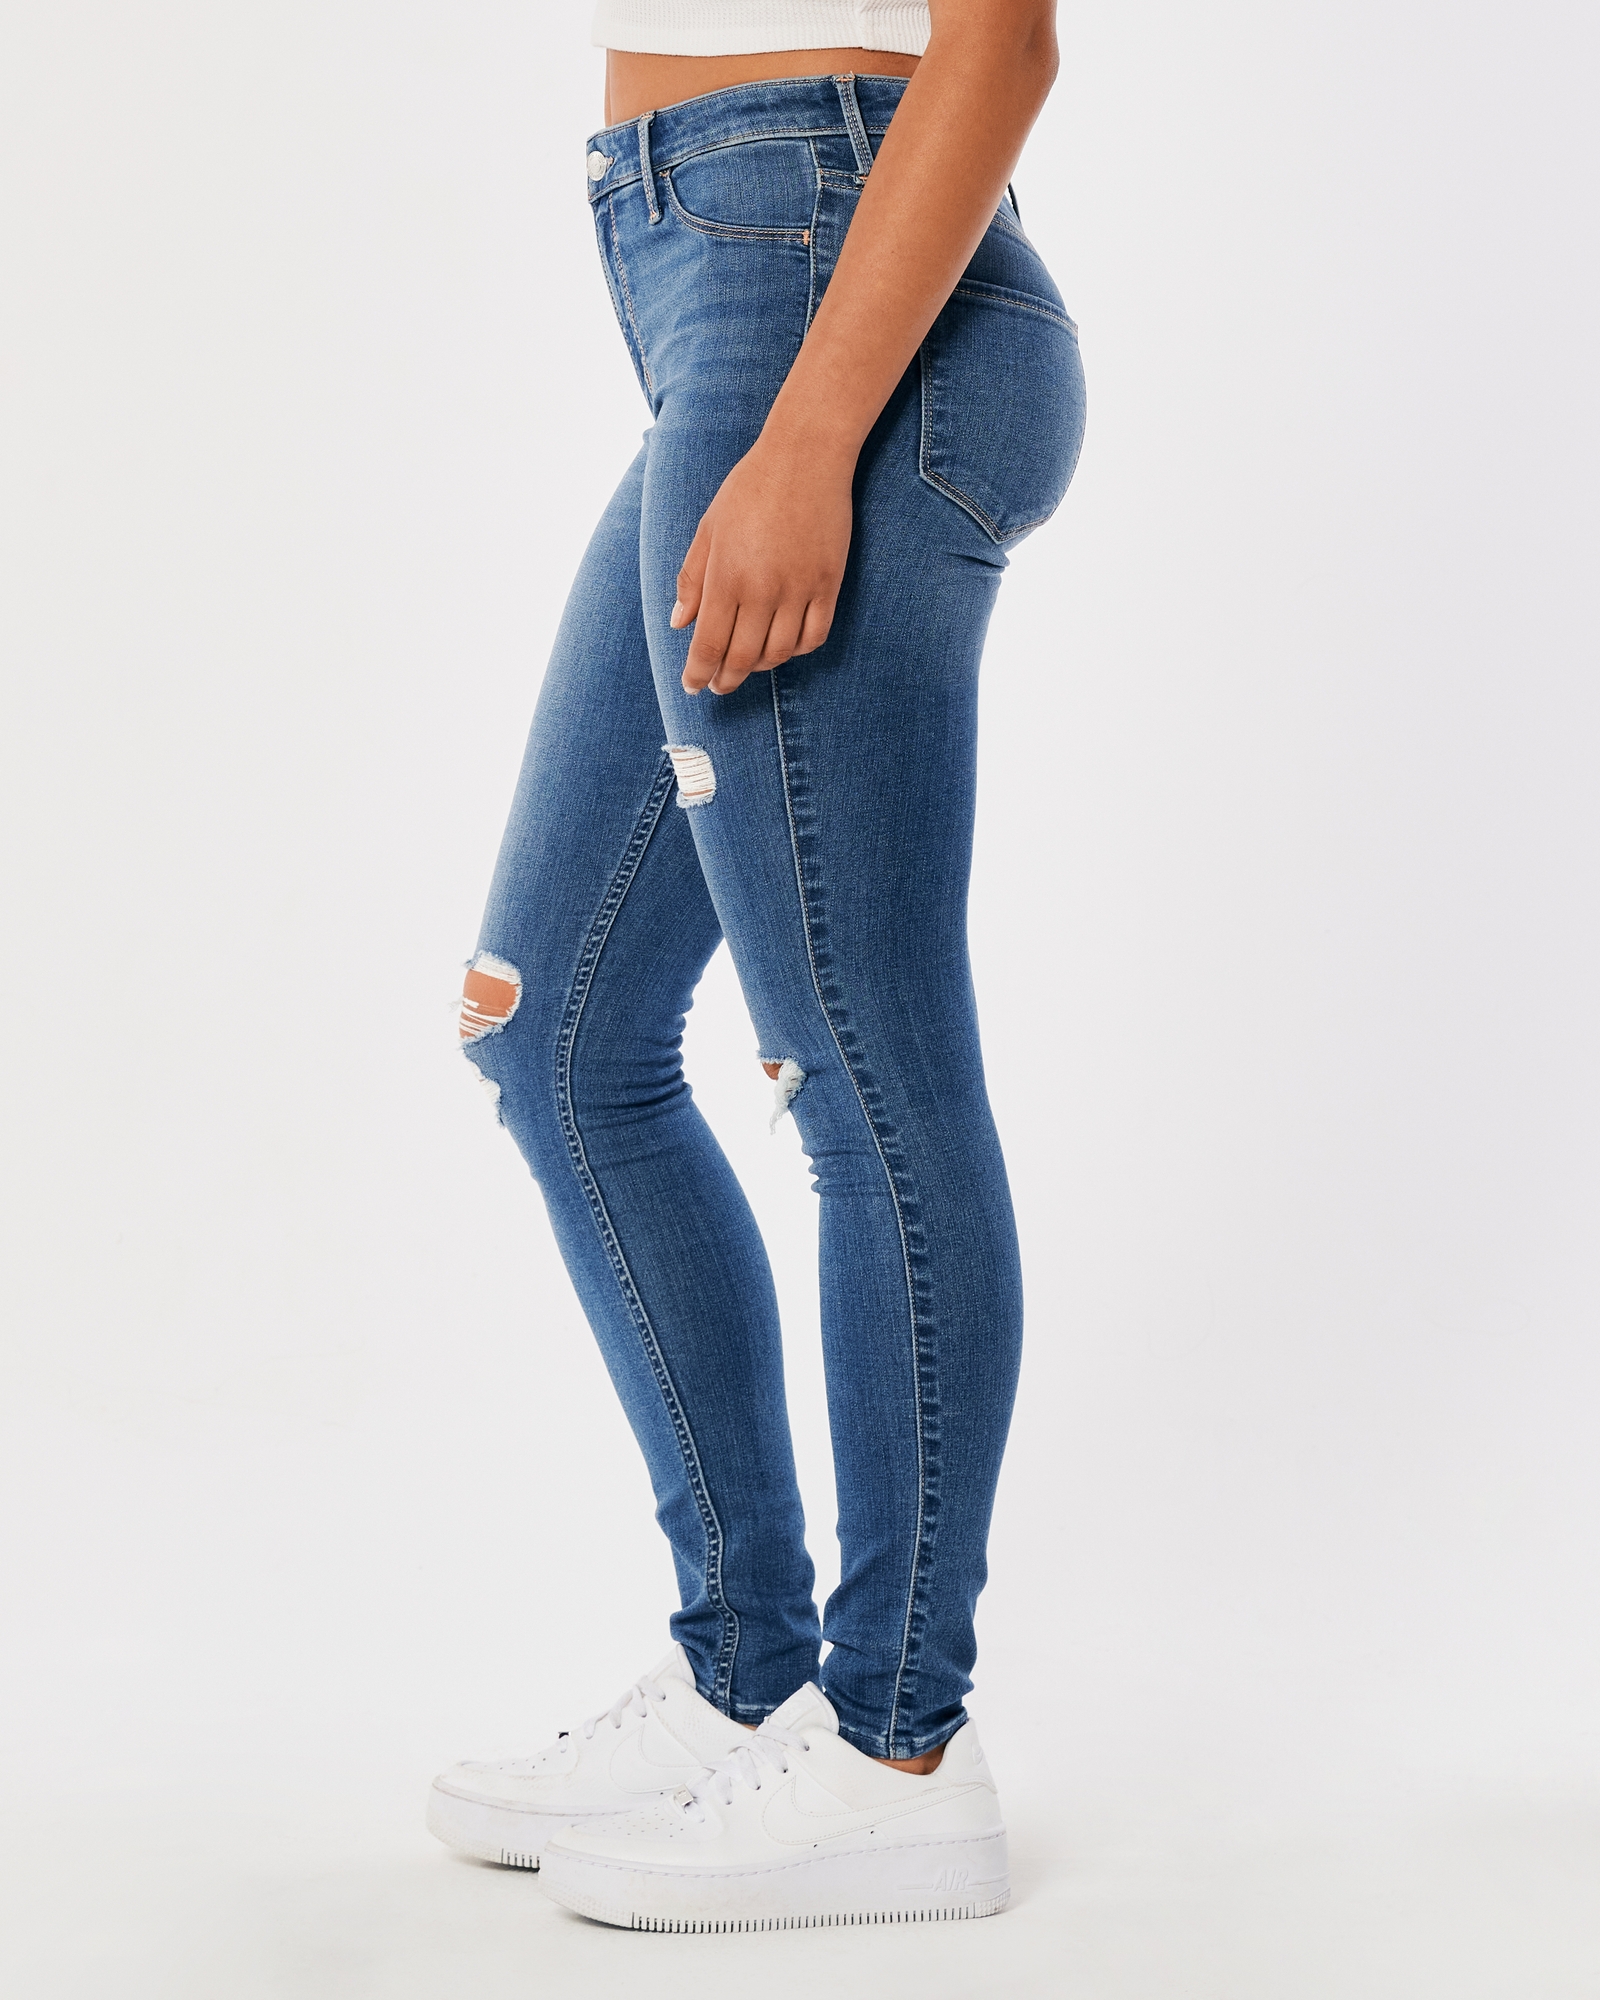 Glistening Jeans - Medium Wash  Womens ripped jeans, Ripped high waisted  jeans, High waist jeggings